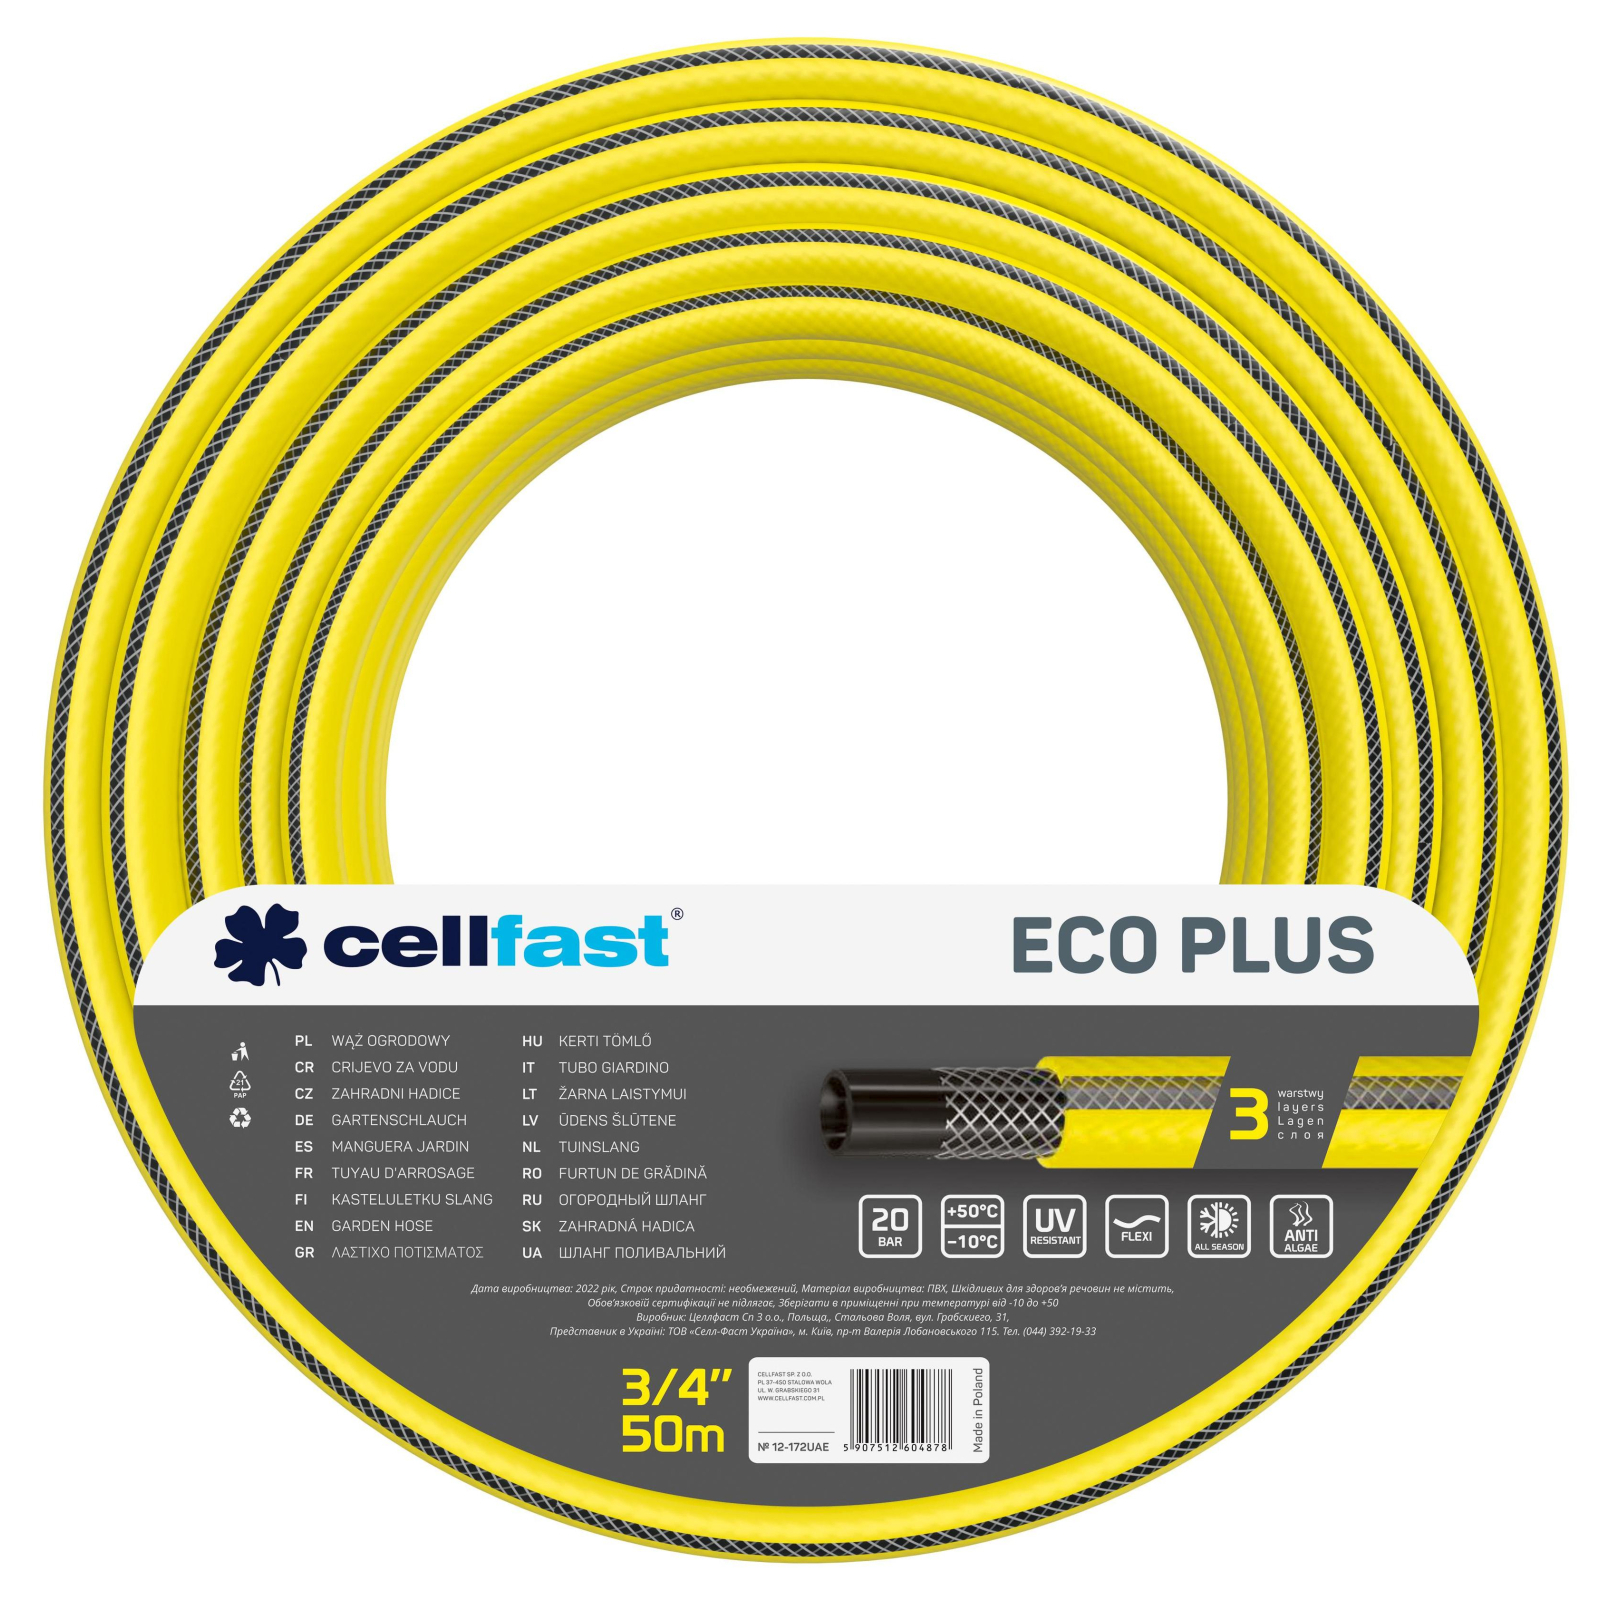 Поливочный шланг Cellfast ECO PLUS 3/4" 50м, 3 слоя, до 20 Бар, -10…+50°C (12-172)